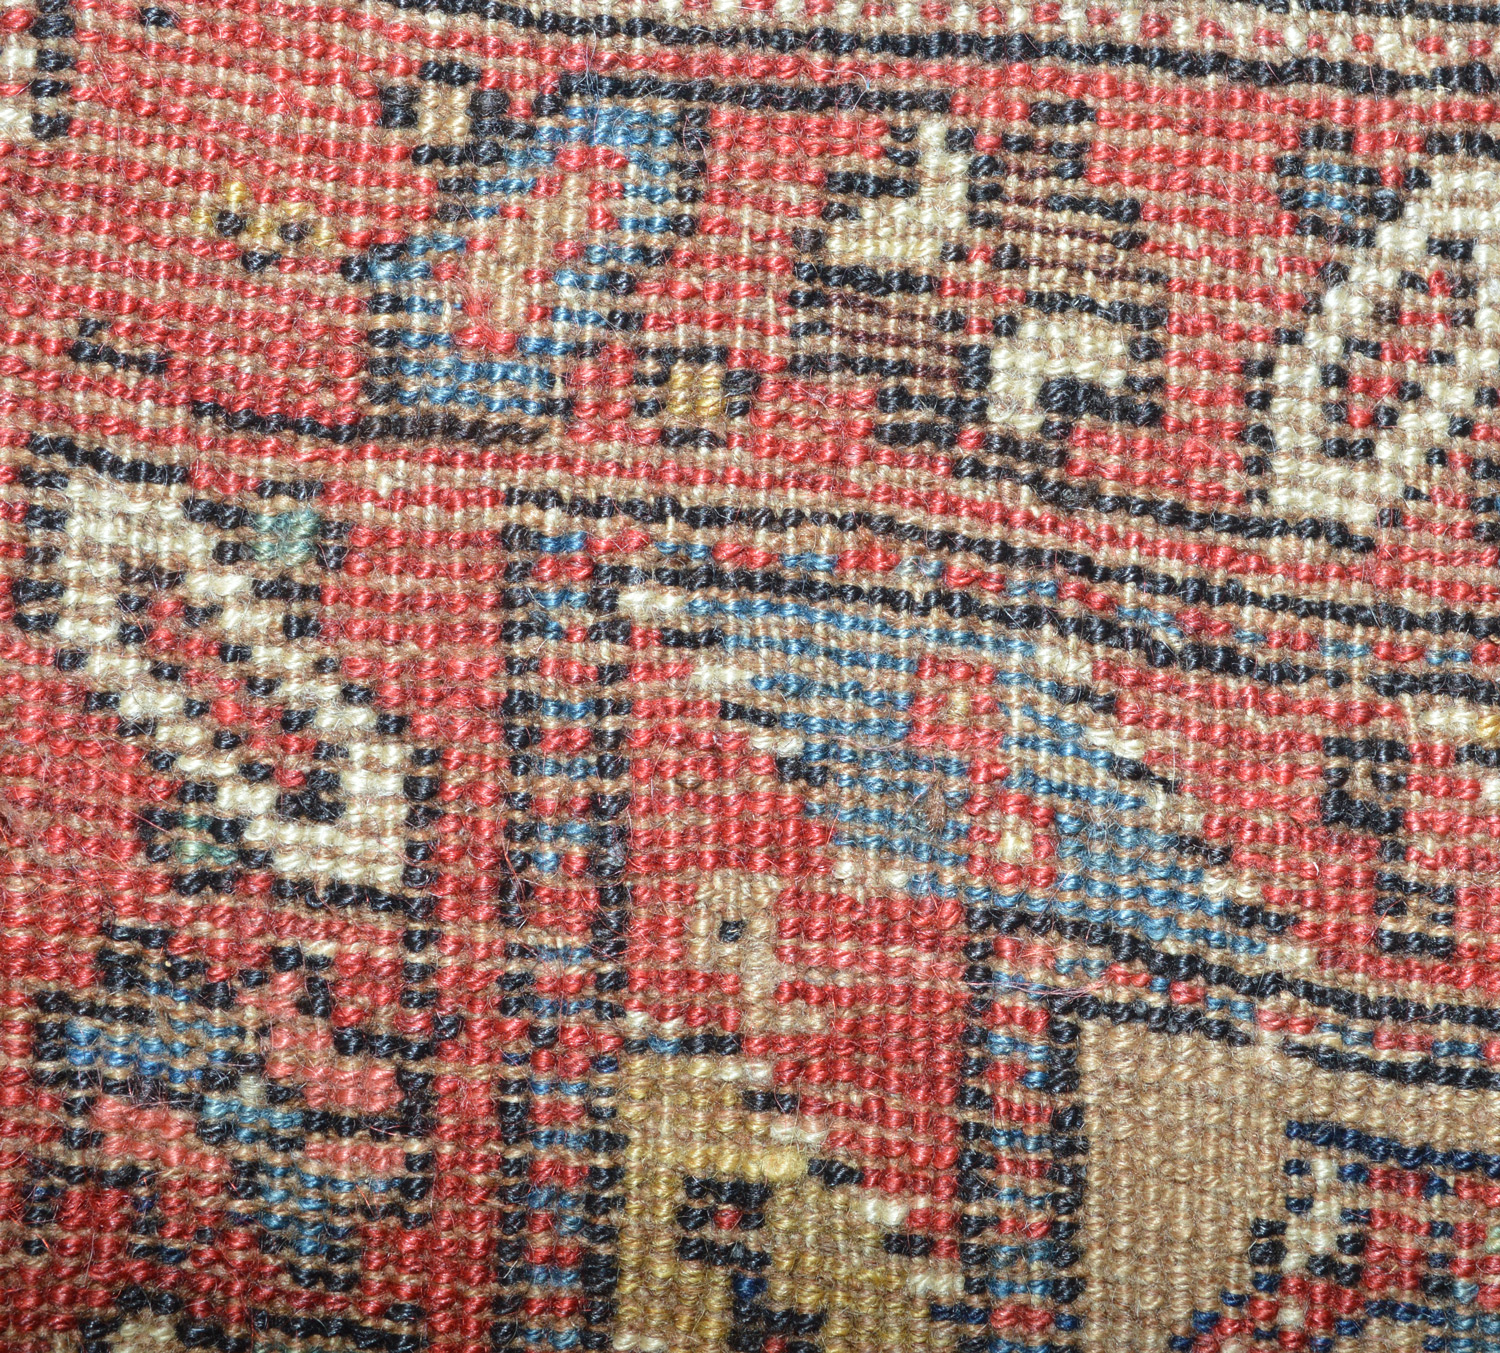 Weave detail of an antique northwest Persian Kurdish tribal rug, circa 1900 - Douglas Stock Gallery, antique tribal rugs Boston,MA area New England